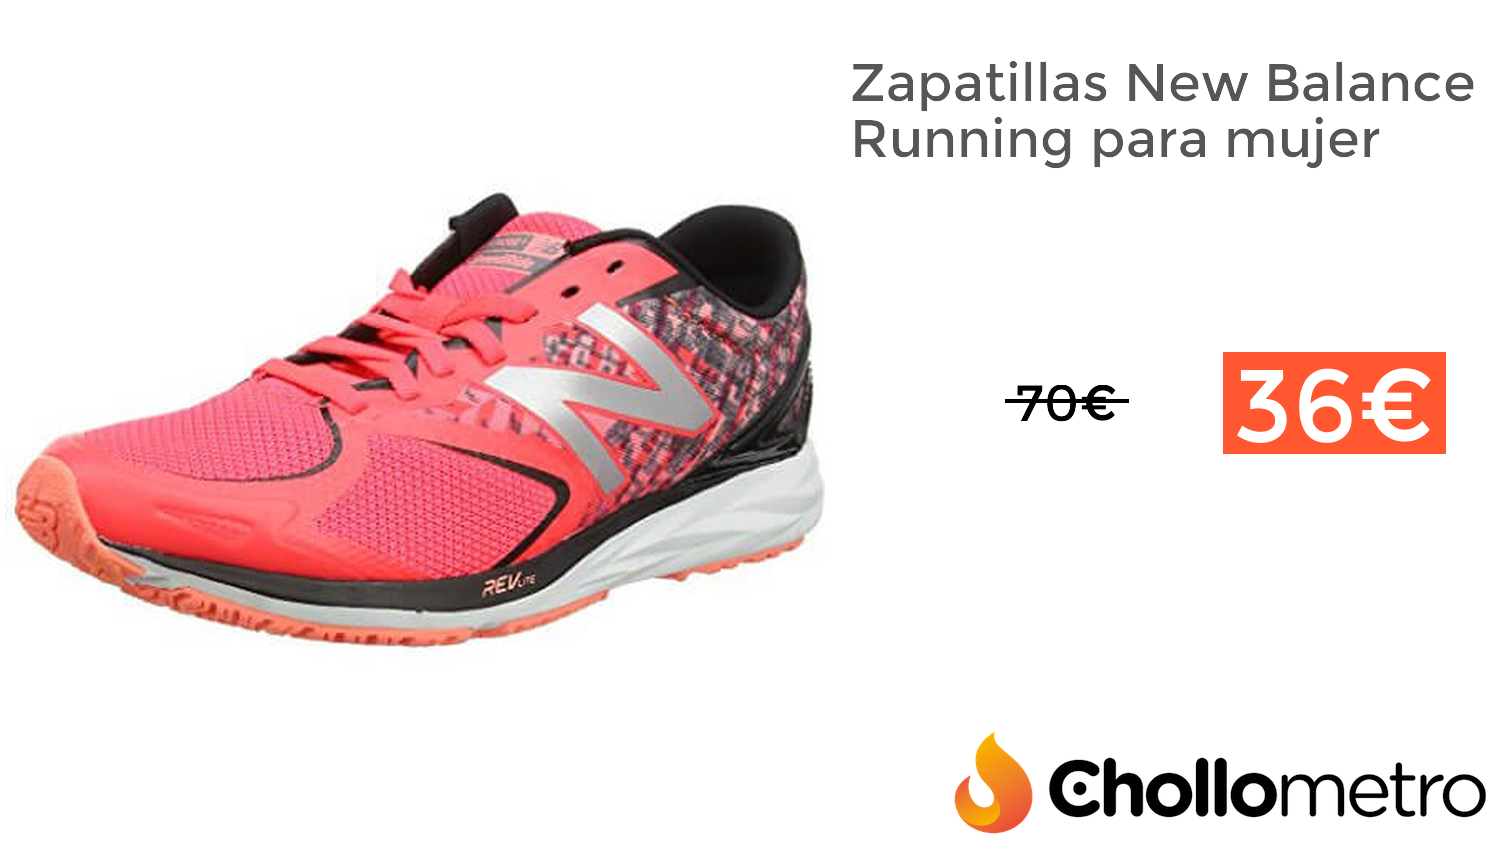 Chollometro Twitter: "#CHOLLO Zapatillas New Balance Running para por 36€ ➡️ https://t.co/LzR5Mgz3Ma https://t.co/siup7W0ivq" /